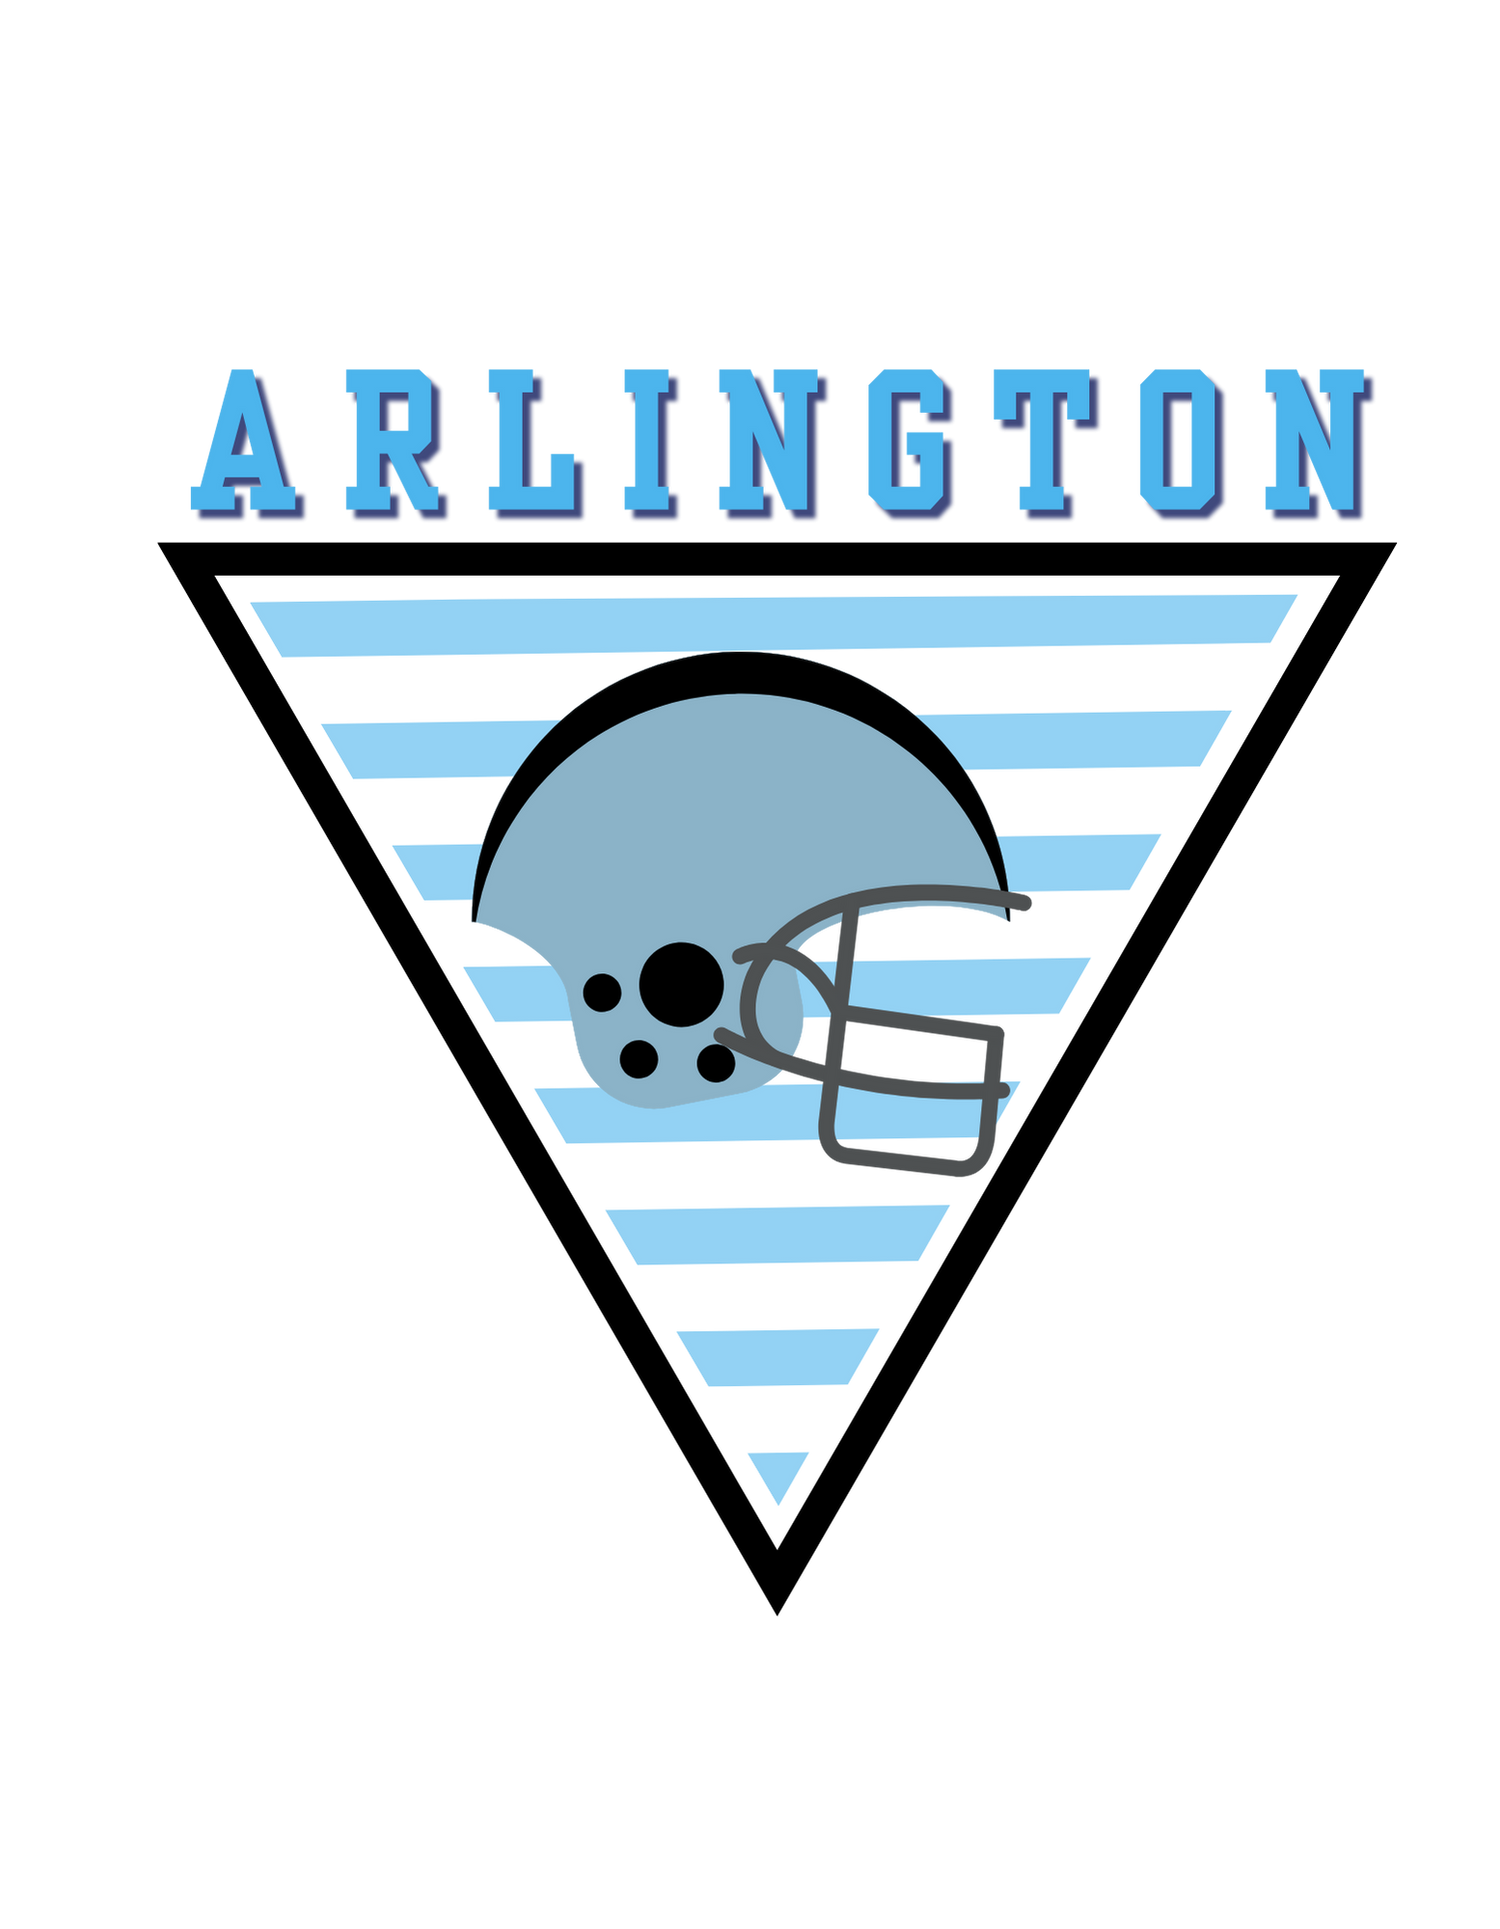 Arlington Renegades